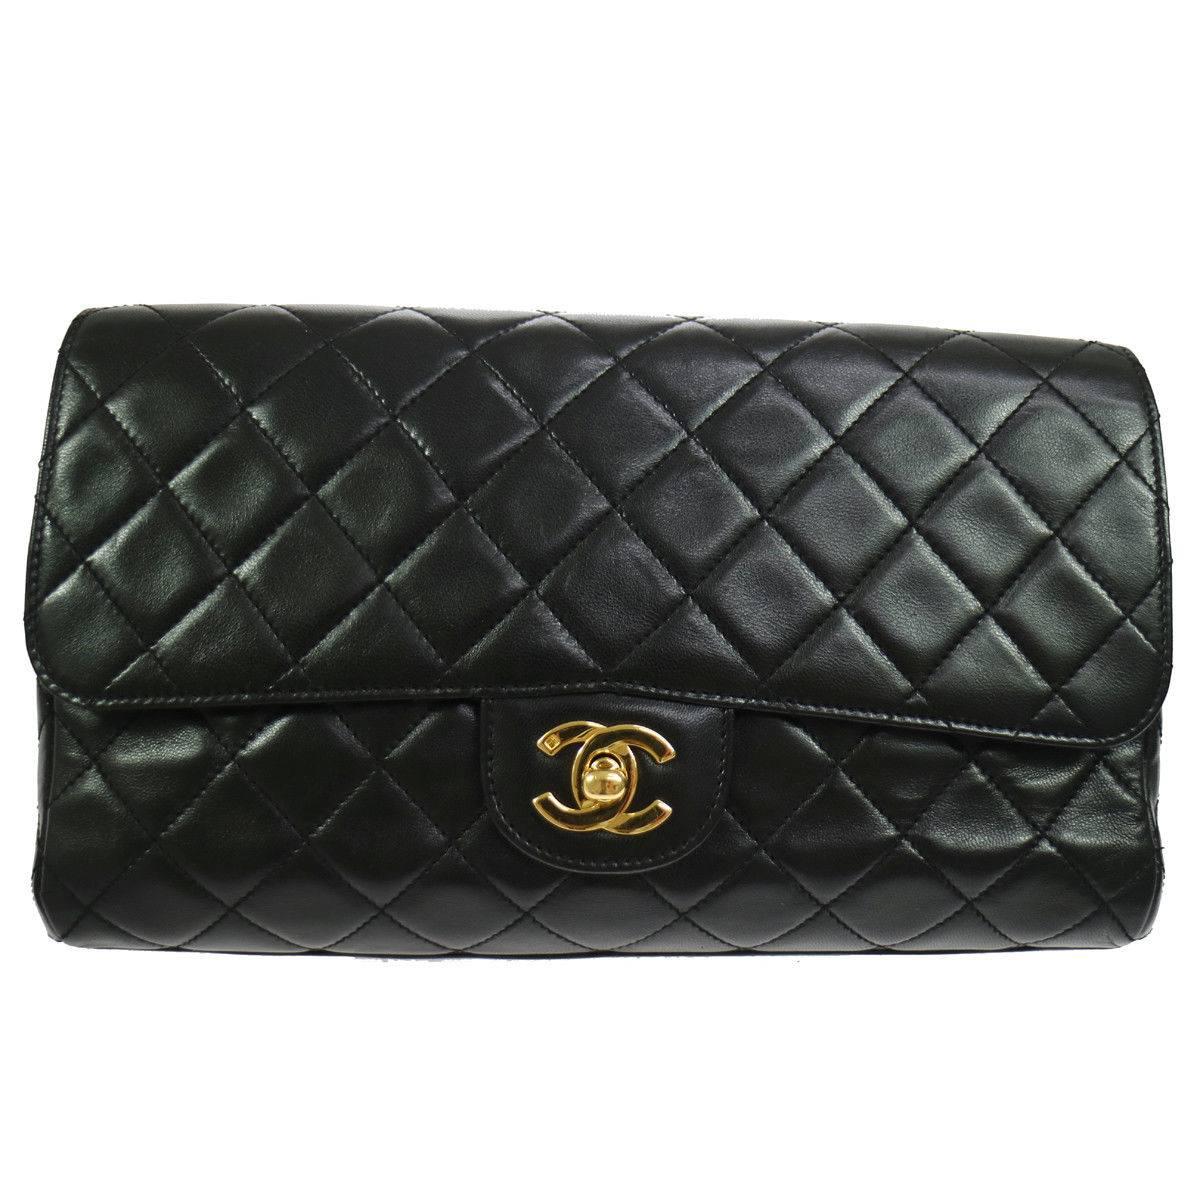 Chanel Black Lambskin Gold Top Handle Envelope Evening Clutch Flap Bag